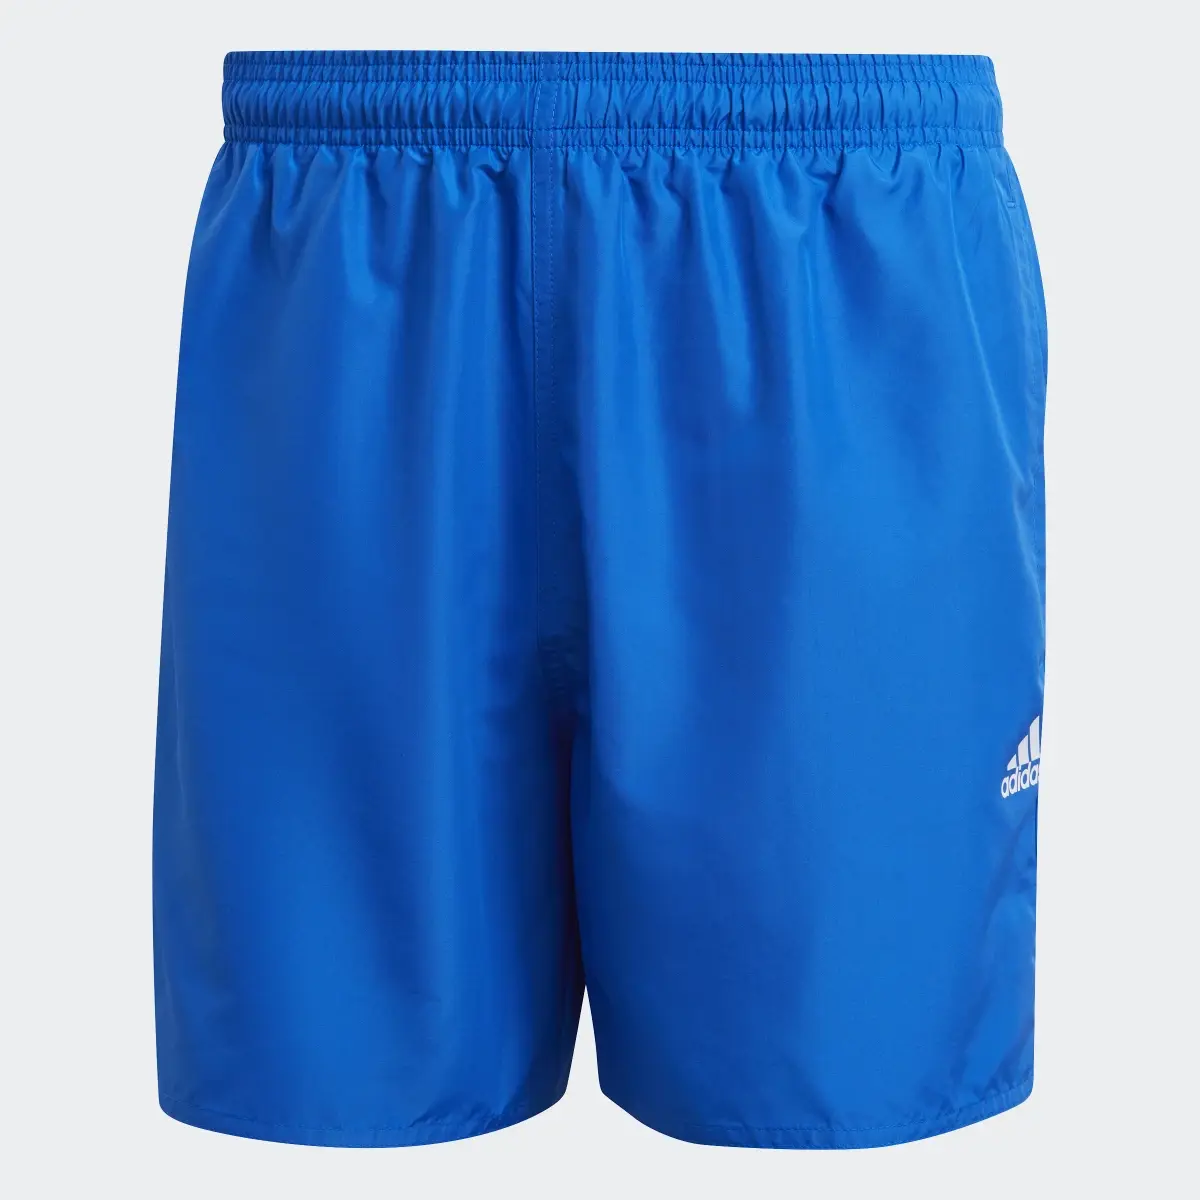 Adidas Solid Swim Shorts. 1